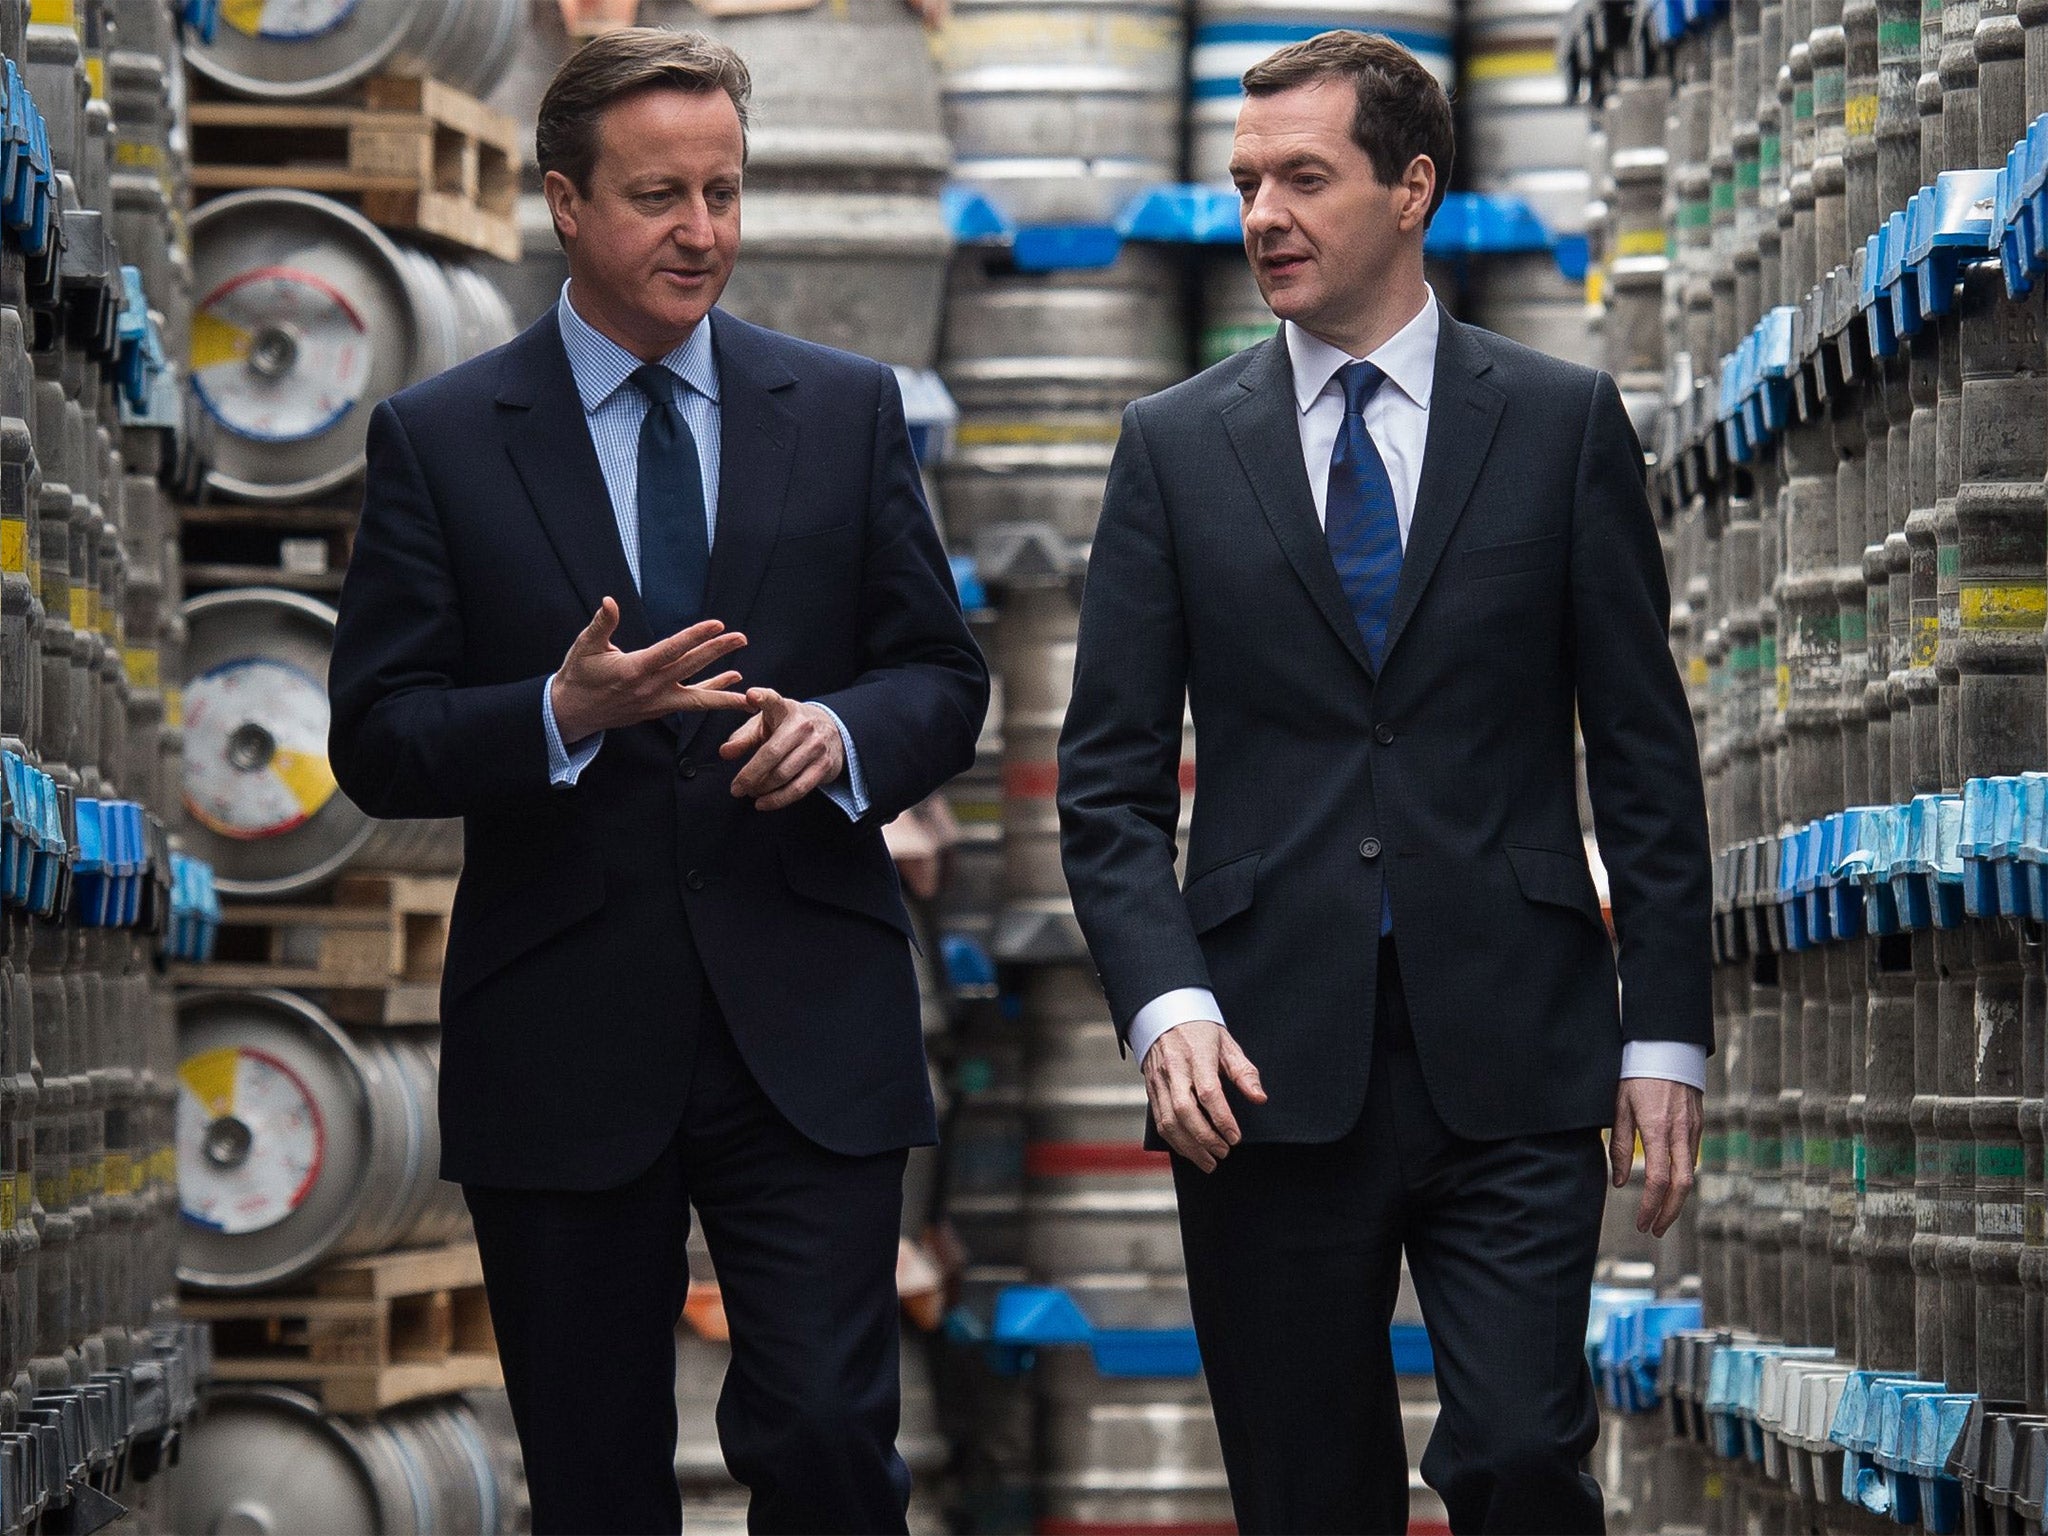 David Cameron and George Osborne visit Marston’s Brewery on Wednesday